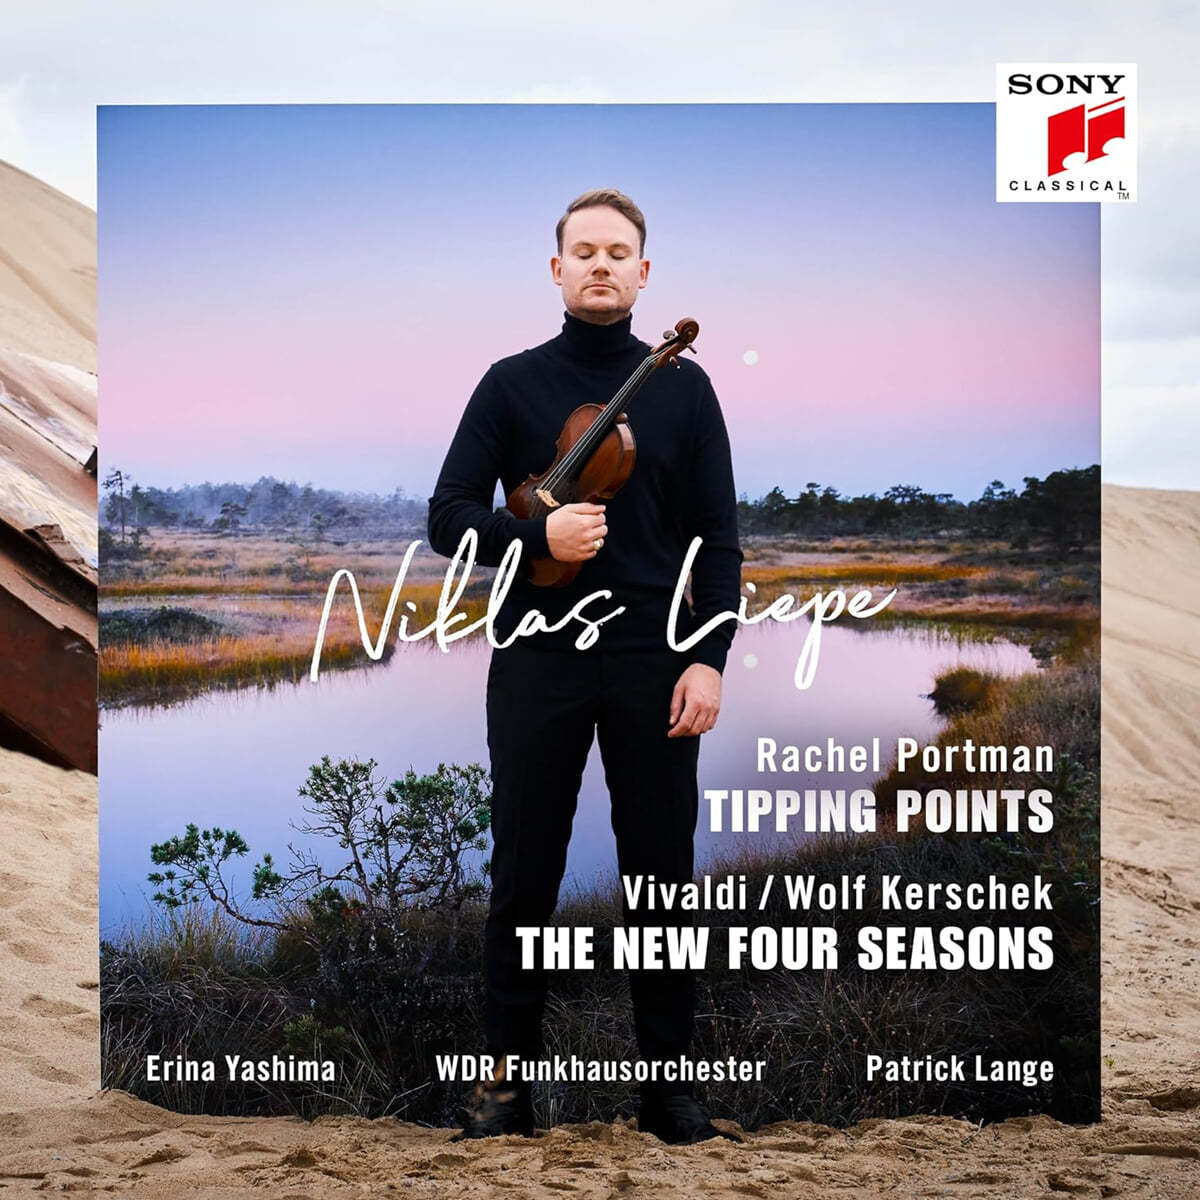 Niklas Liepe 레이첼 포트만: 티핑 포인츠 / 비발디, 볼프 케르쉐크: 새로운 사계 (Rachel Portman: Tipping Points / Vivaldi, Wolf Kerschek: The New Four Seasons)